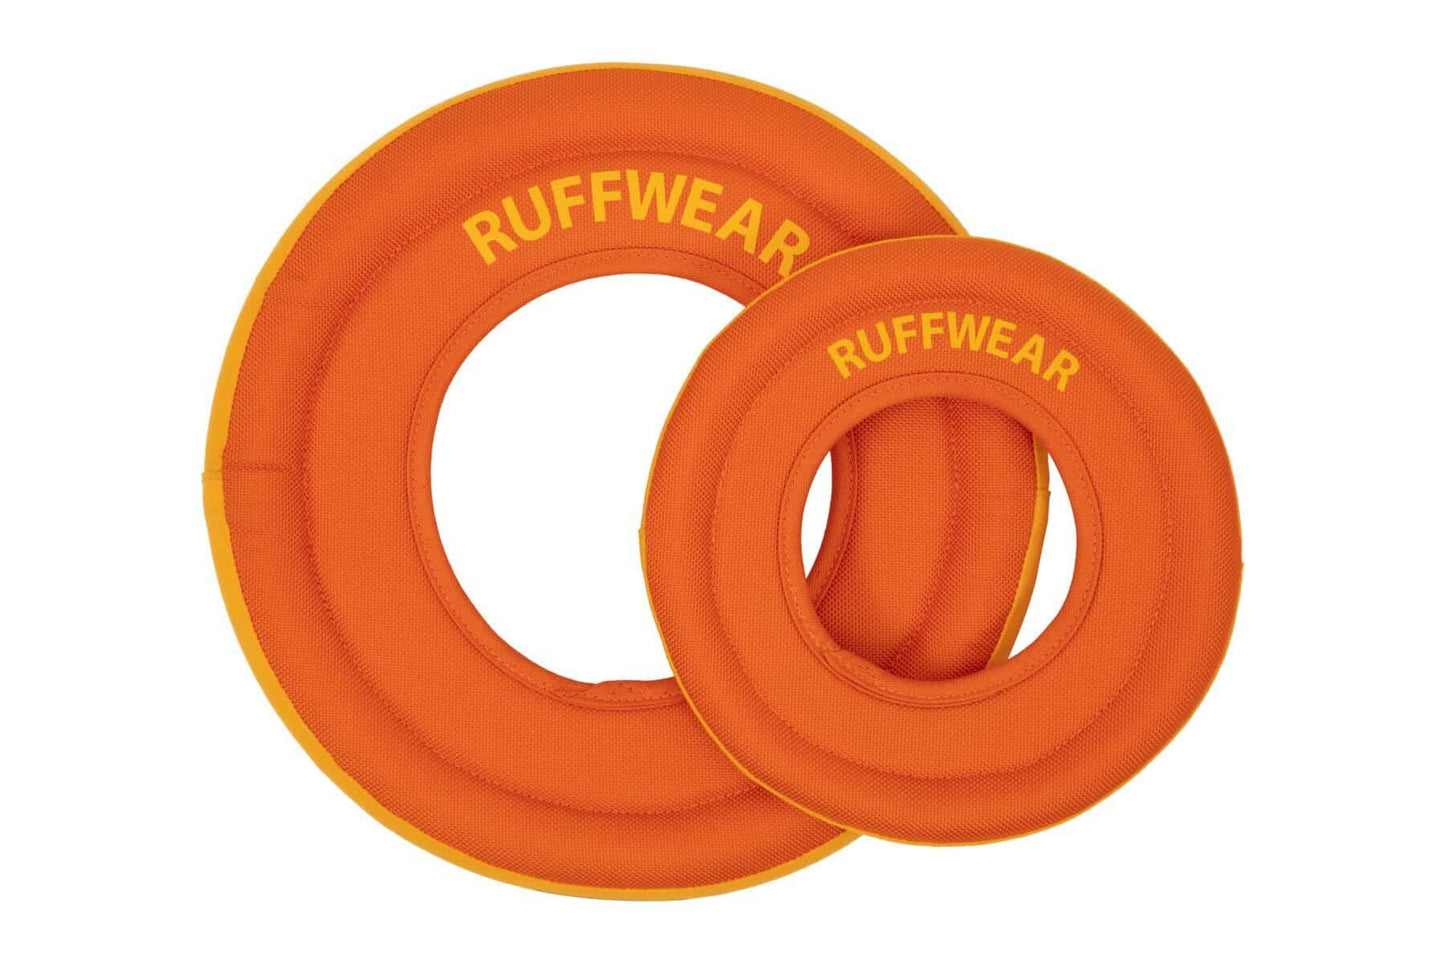 Ruffwear - Hydro Plane